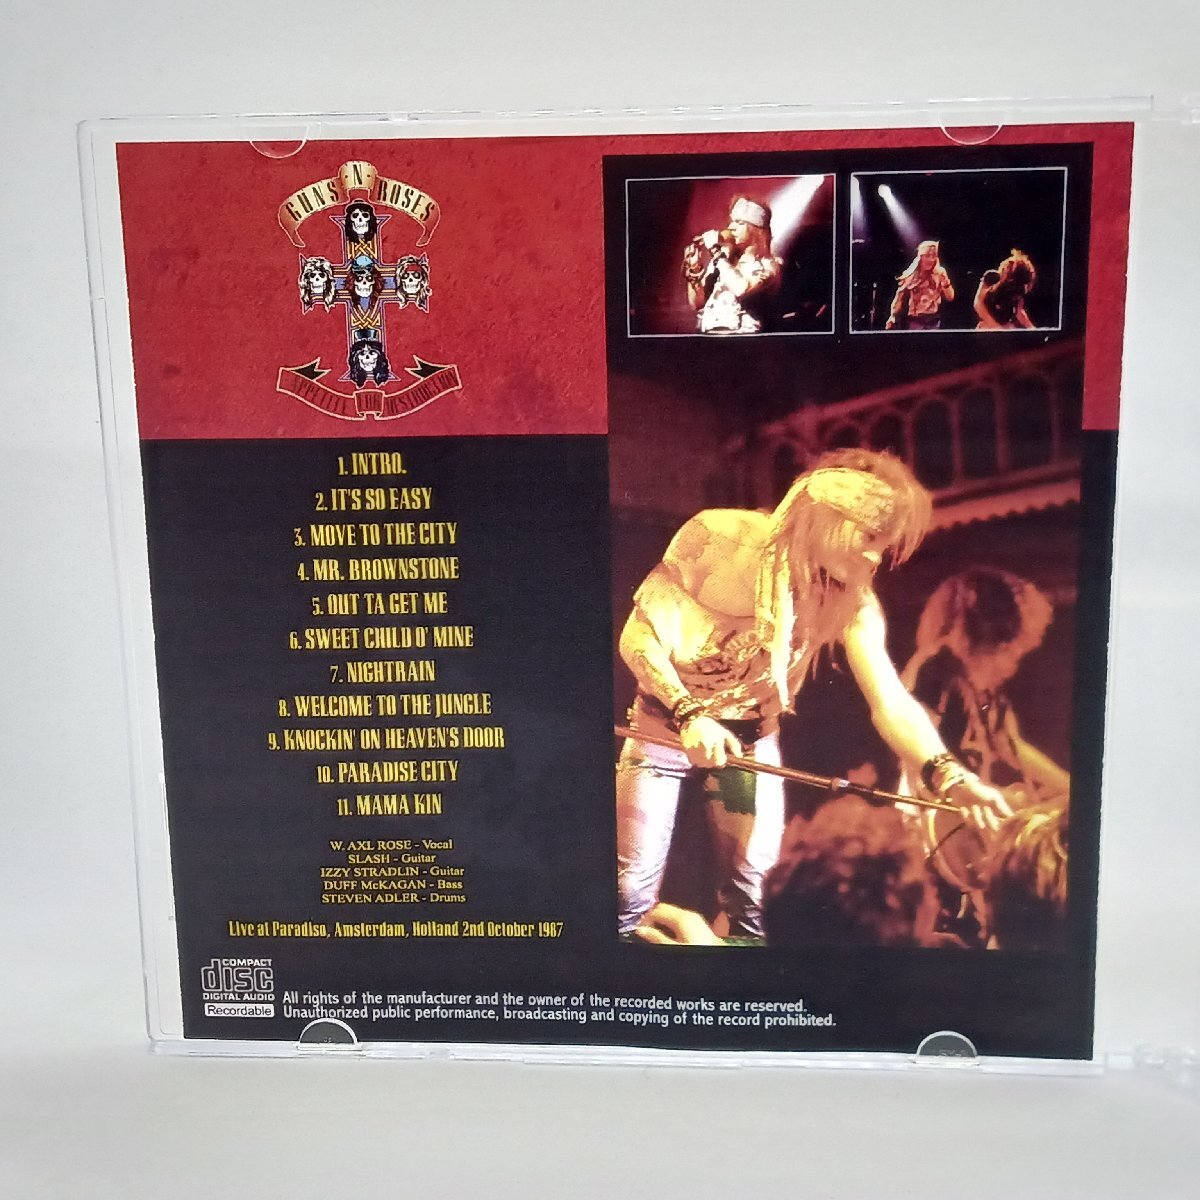 CD-R◇GUNS N' ROSES/AMSTERDAM 1987 PARADISO, AMSTERDAM, HOLLANS 2ND OCTOBER 1987 (CD-R)の画像3